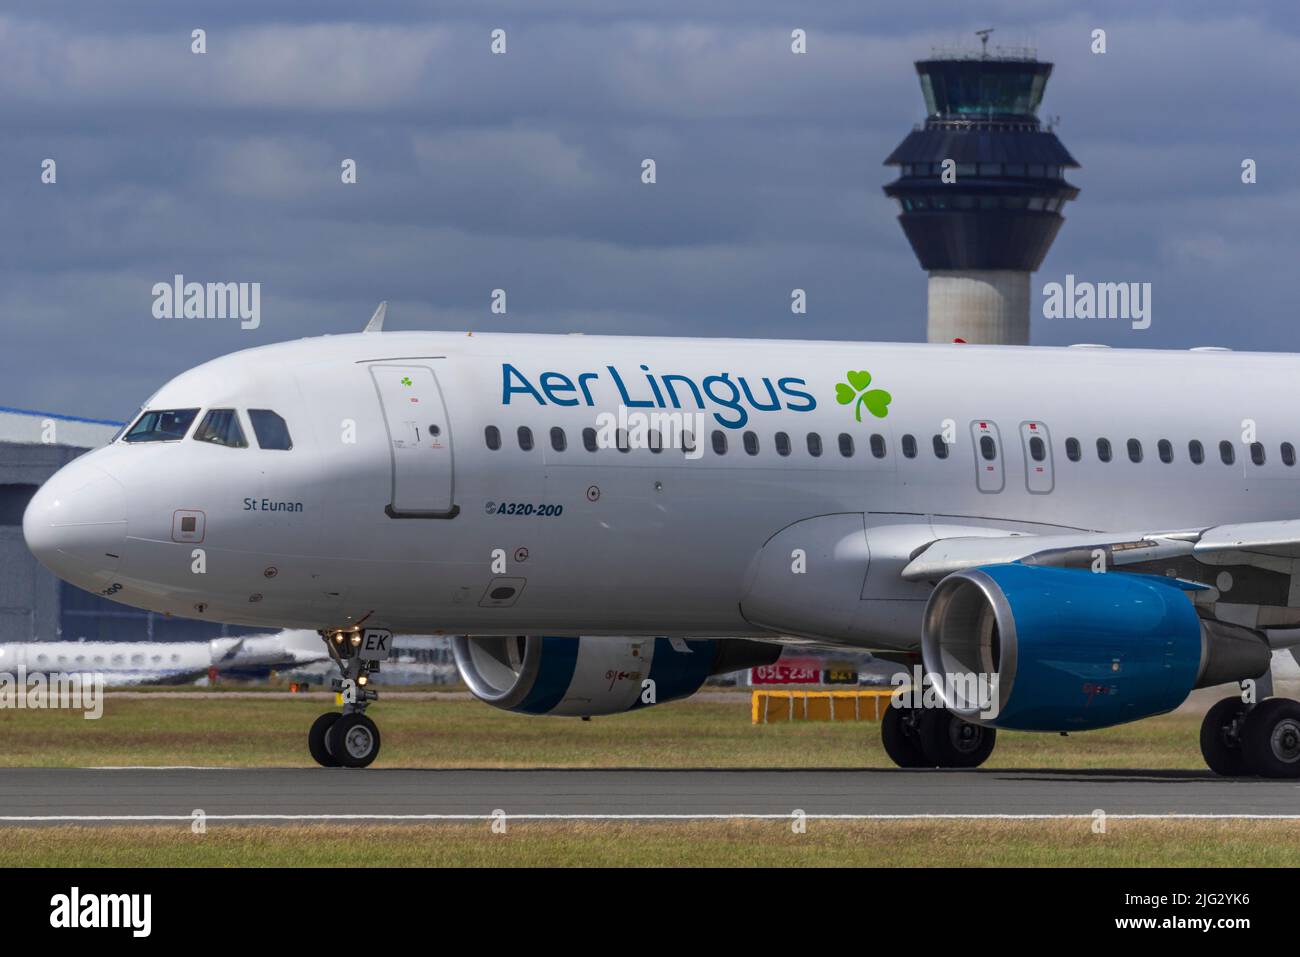 Aer Lingus Airbus A320-200 named St Eunan at Manchester airport. Reg EI-DEK. Stock Photo